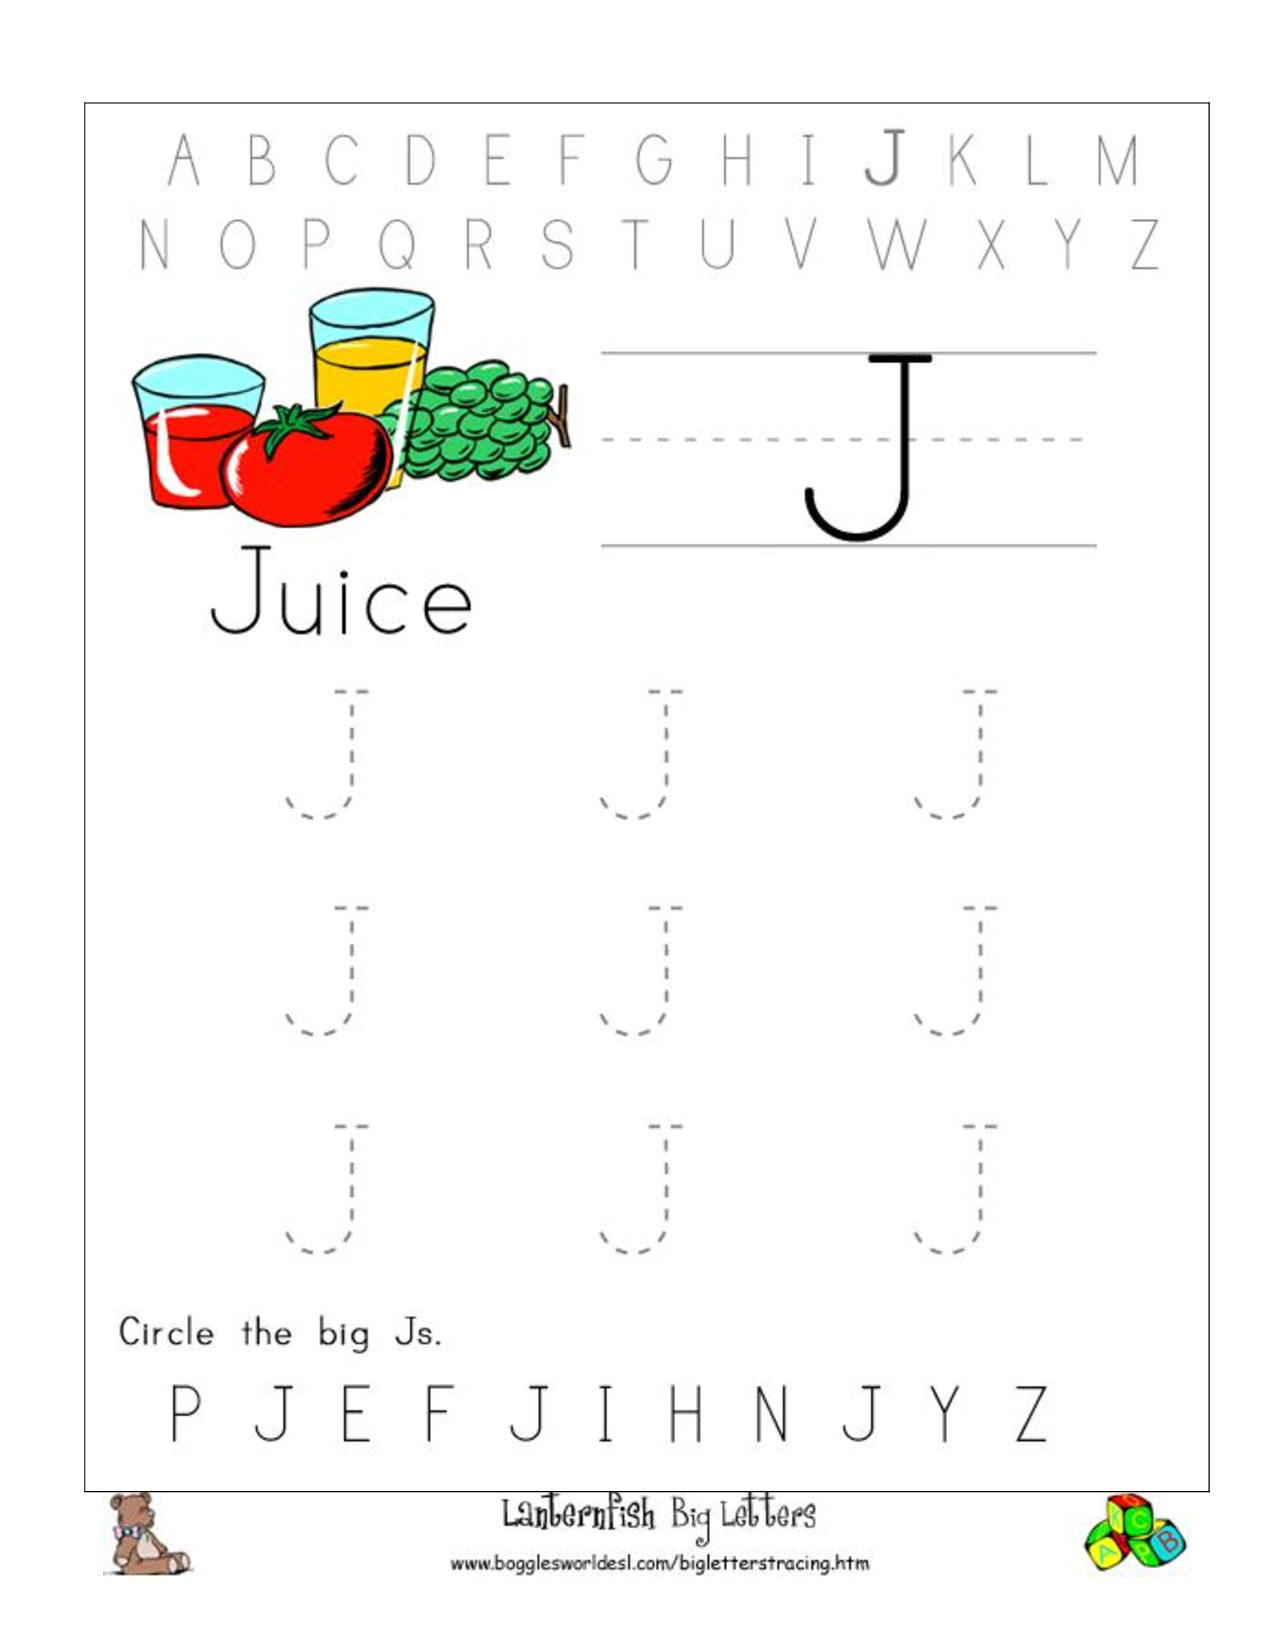  kindergarten worksheets | Preschool worksheets | Printables for kids | #52